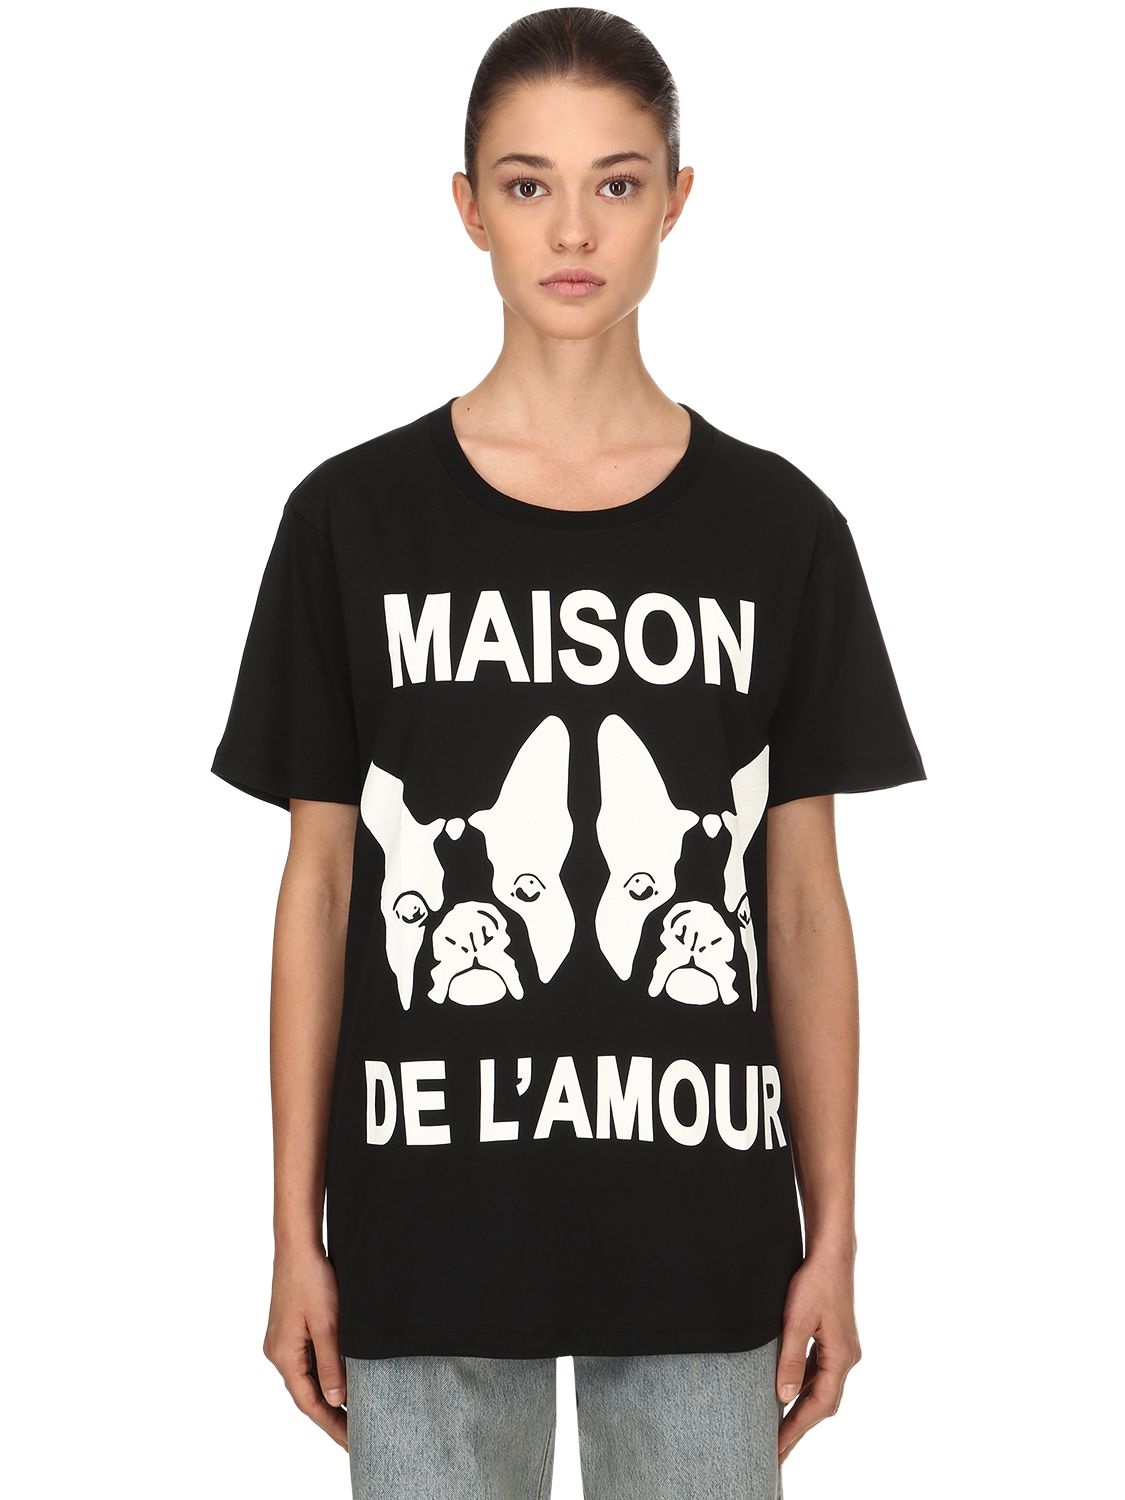 Gucci Maison De l'Amour T-shirt With Bosco And Orso - Farfetch